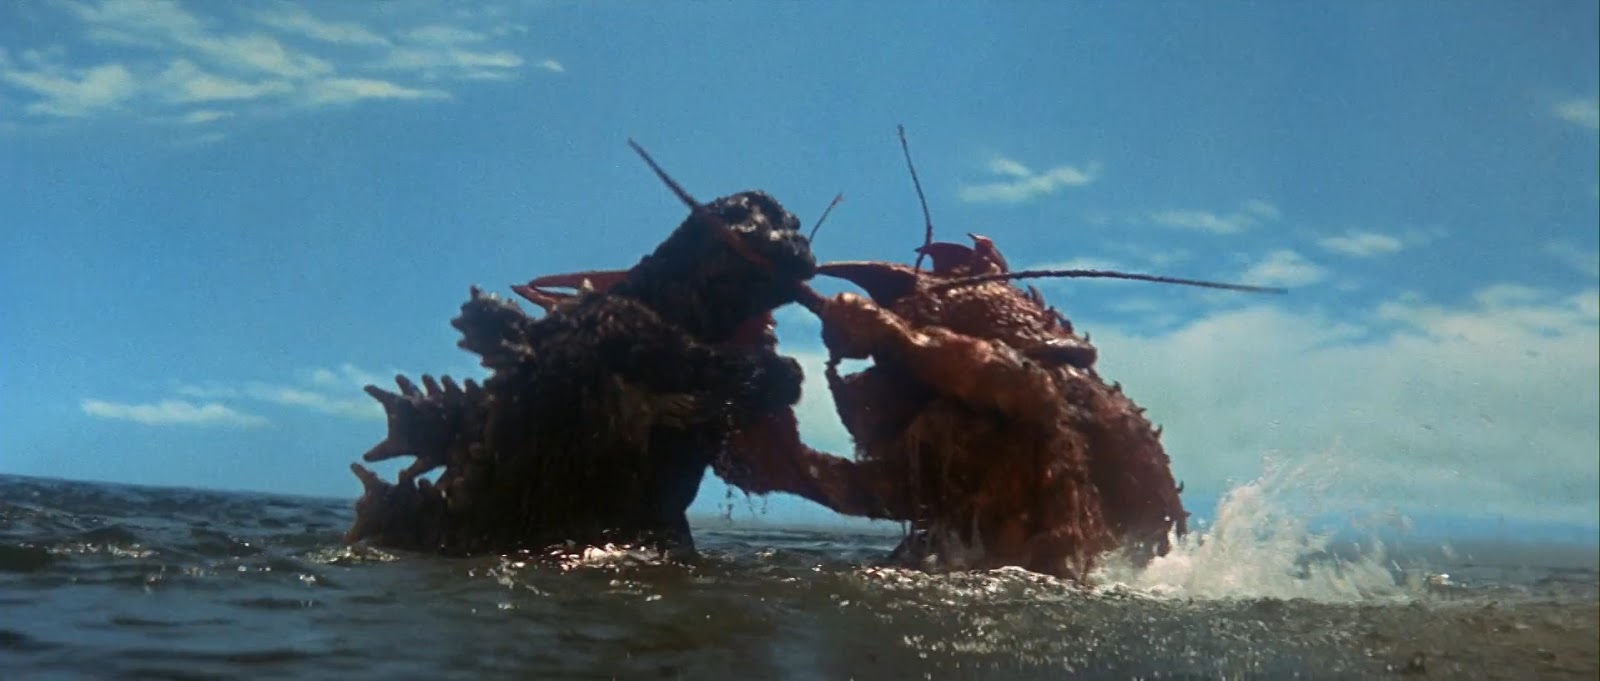 Godzilla vs the sea monster(1966)|1080P|Sub|